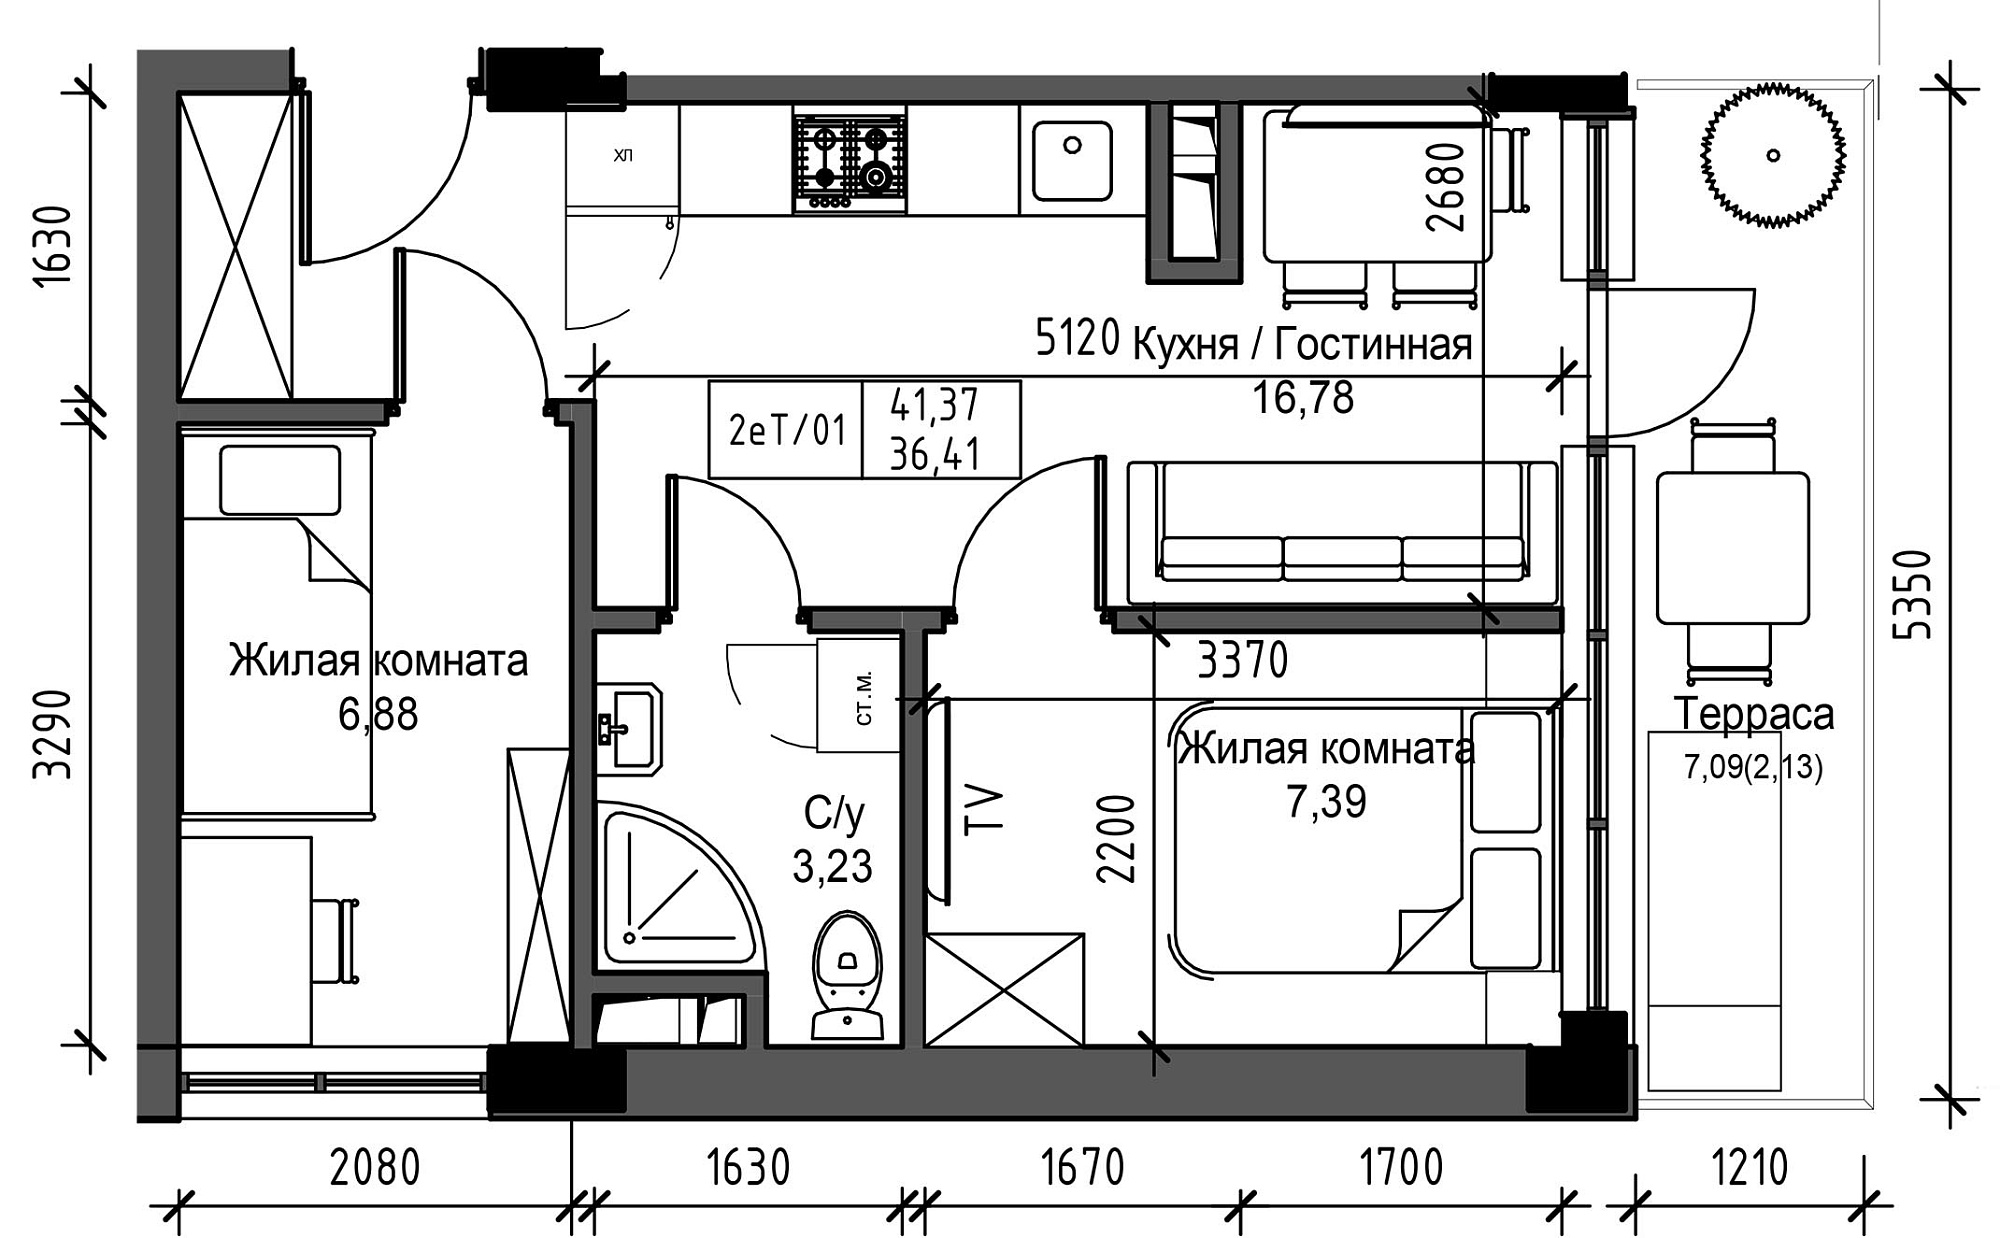 Планування 2-к квартира площею 36.41м2, UM-003-09/0096.